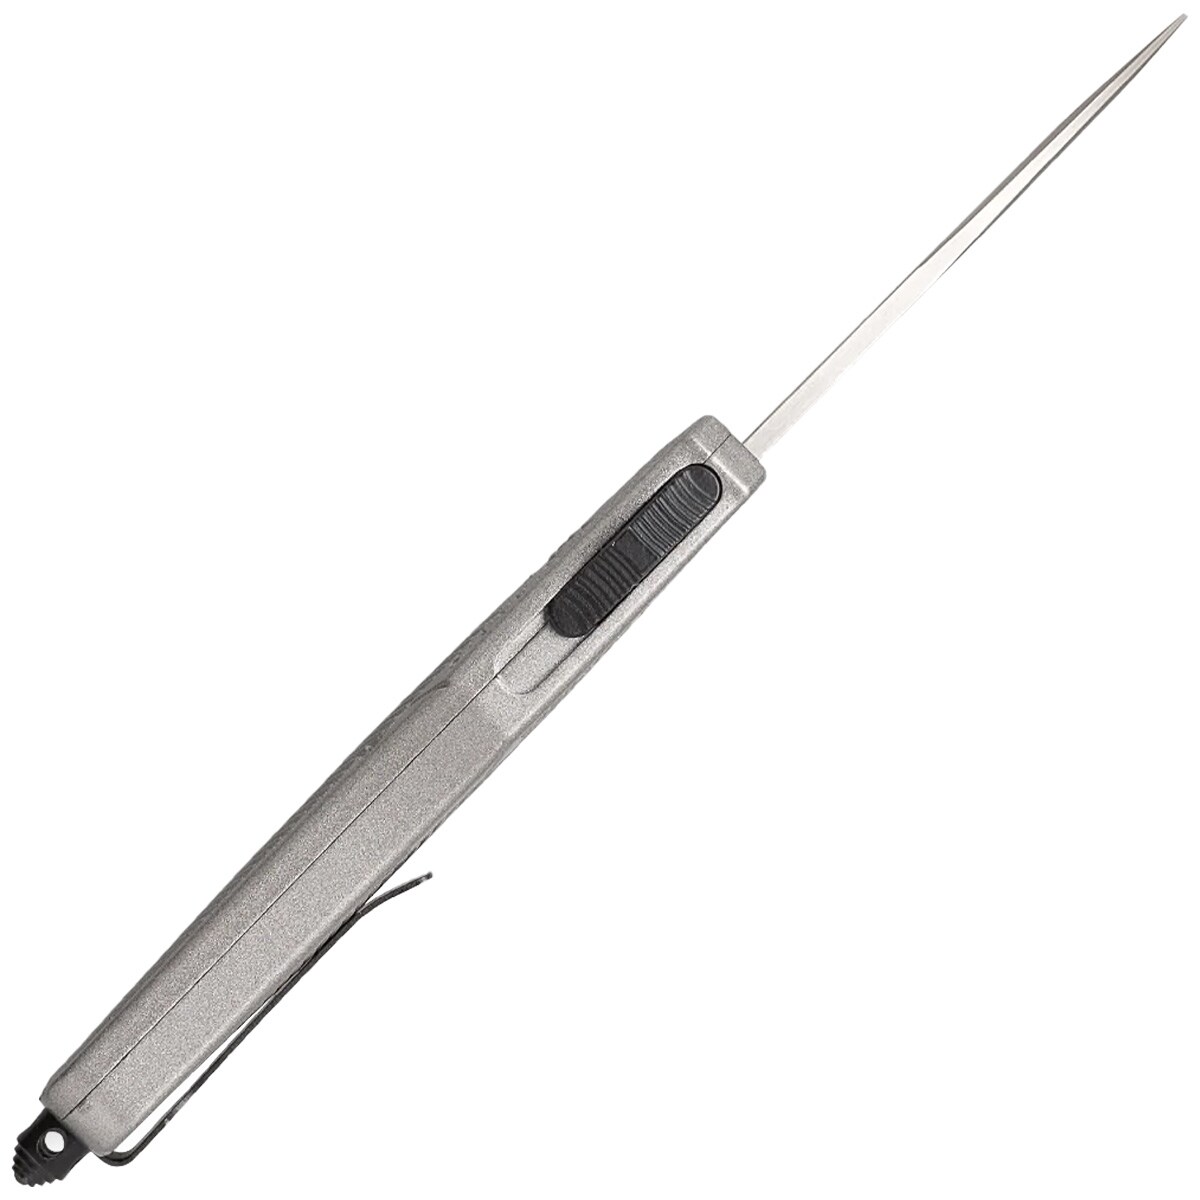 Nóż sprężynowy CobraTec Medium CTK-1 Drop-Point - Silver